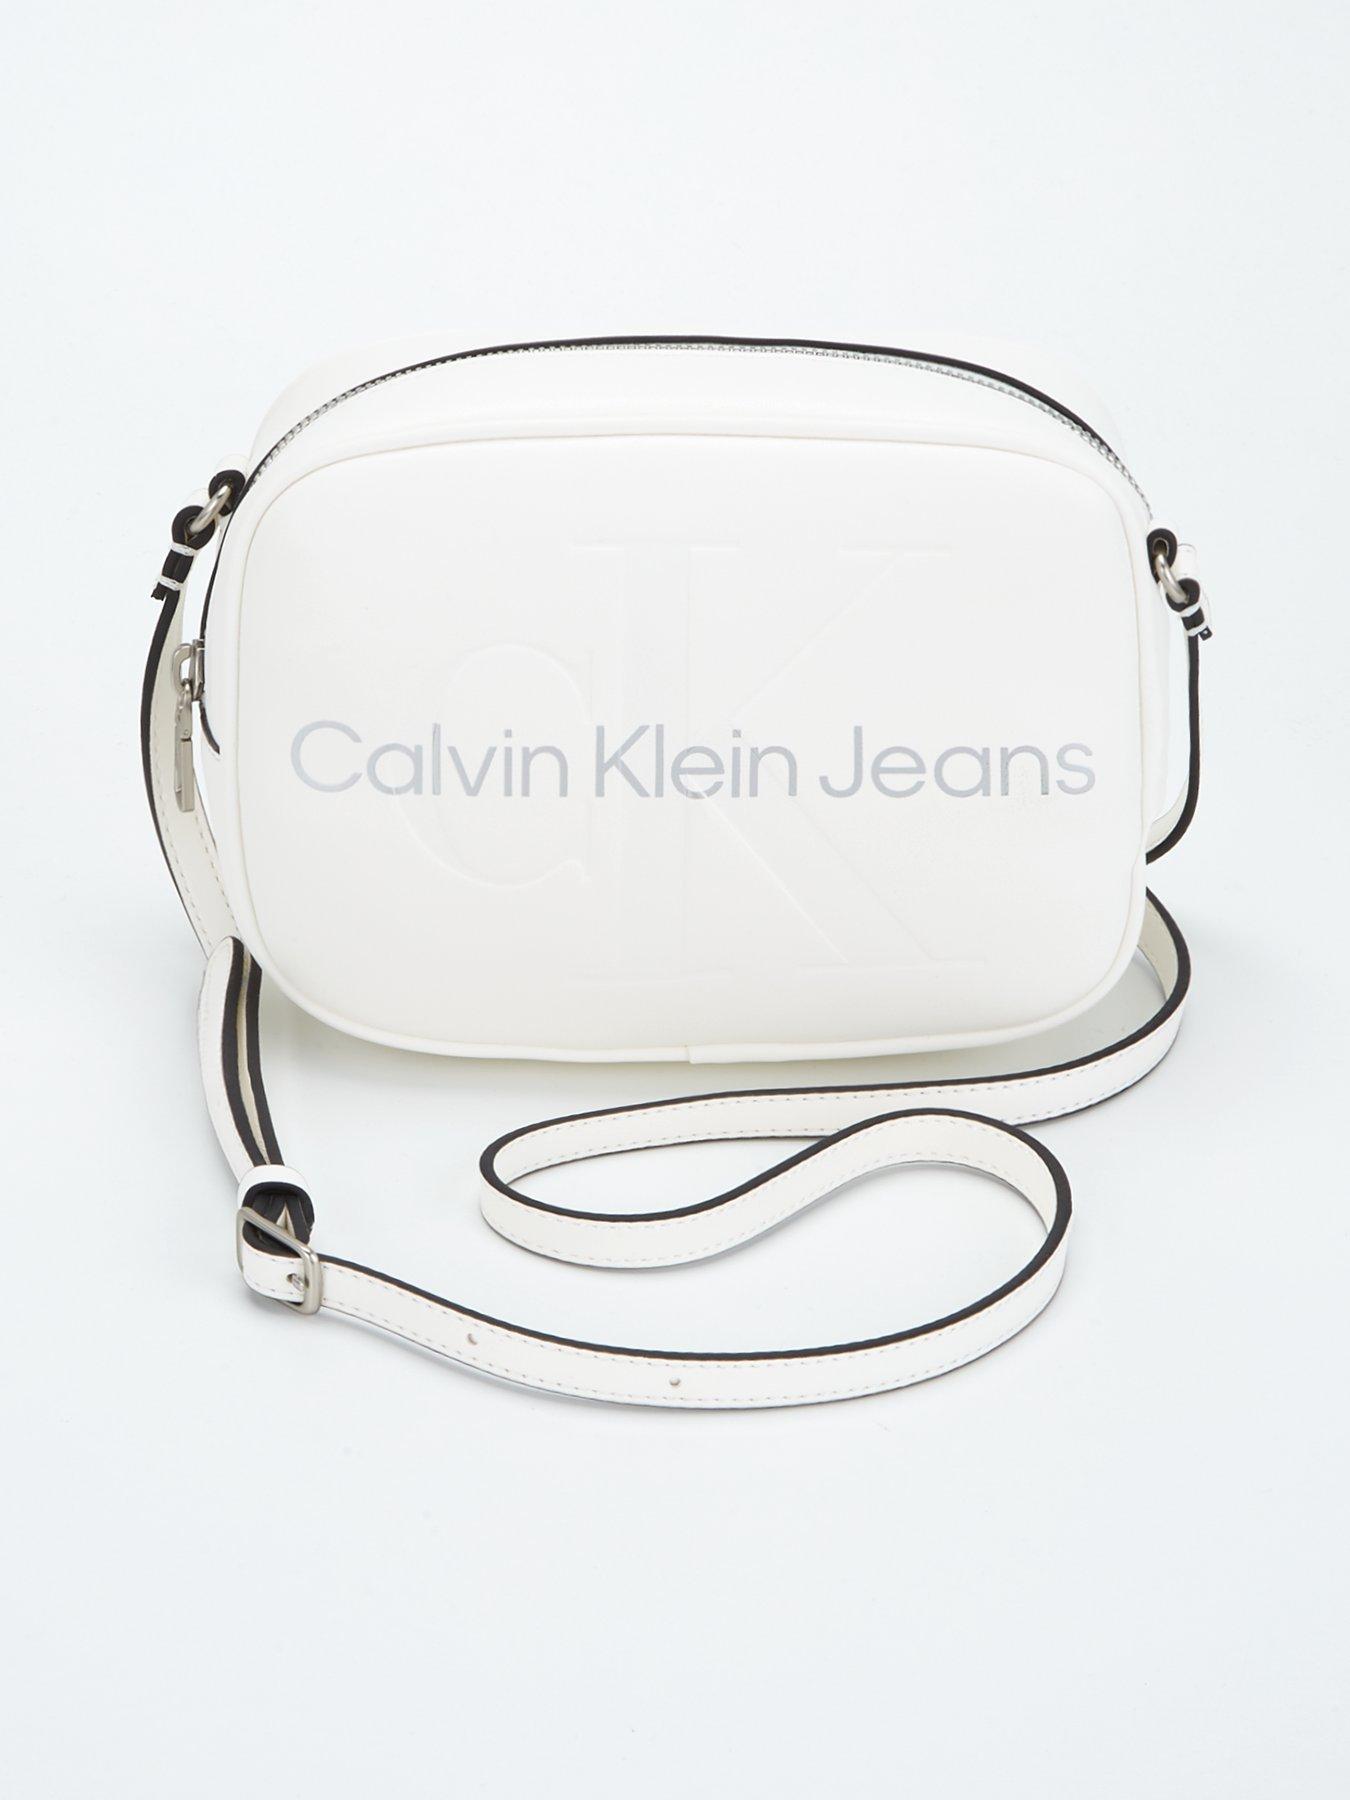 Calvin Klein Jeans Logo Strap Cross Body Bag - Black